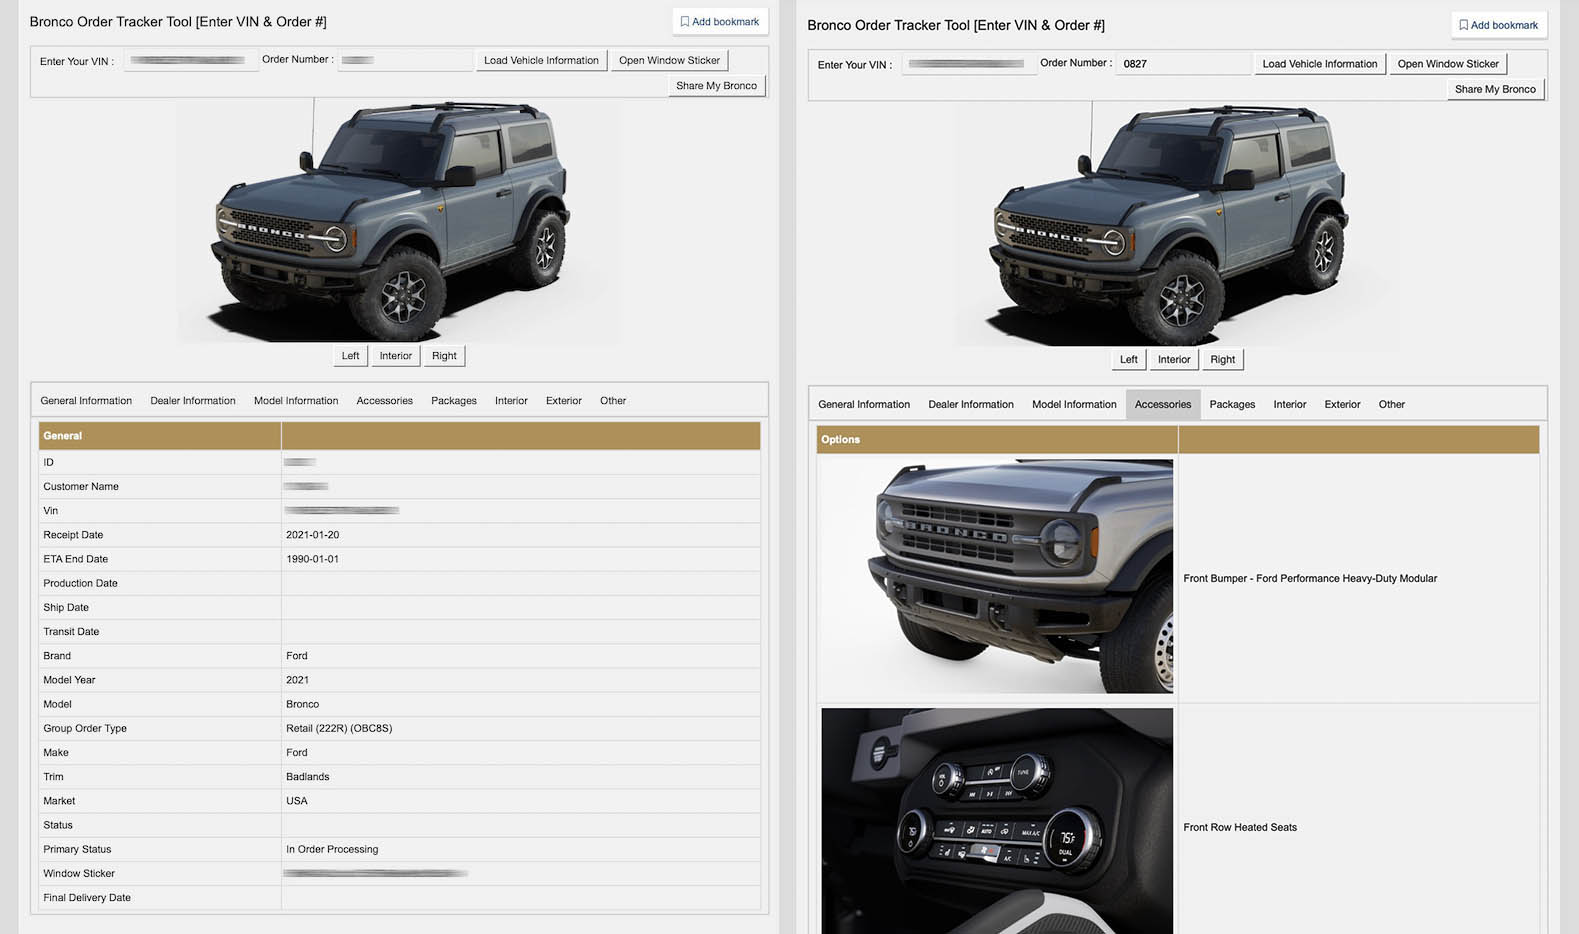 2021 Ford Bronco Order Tracker Tracking Tool 2-2.jpg